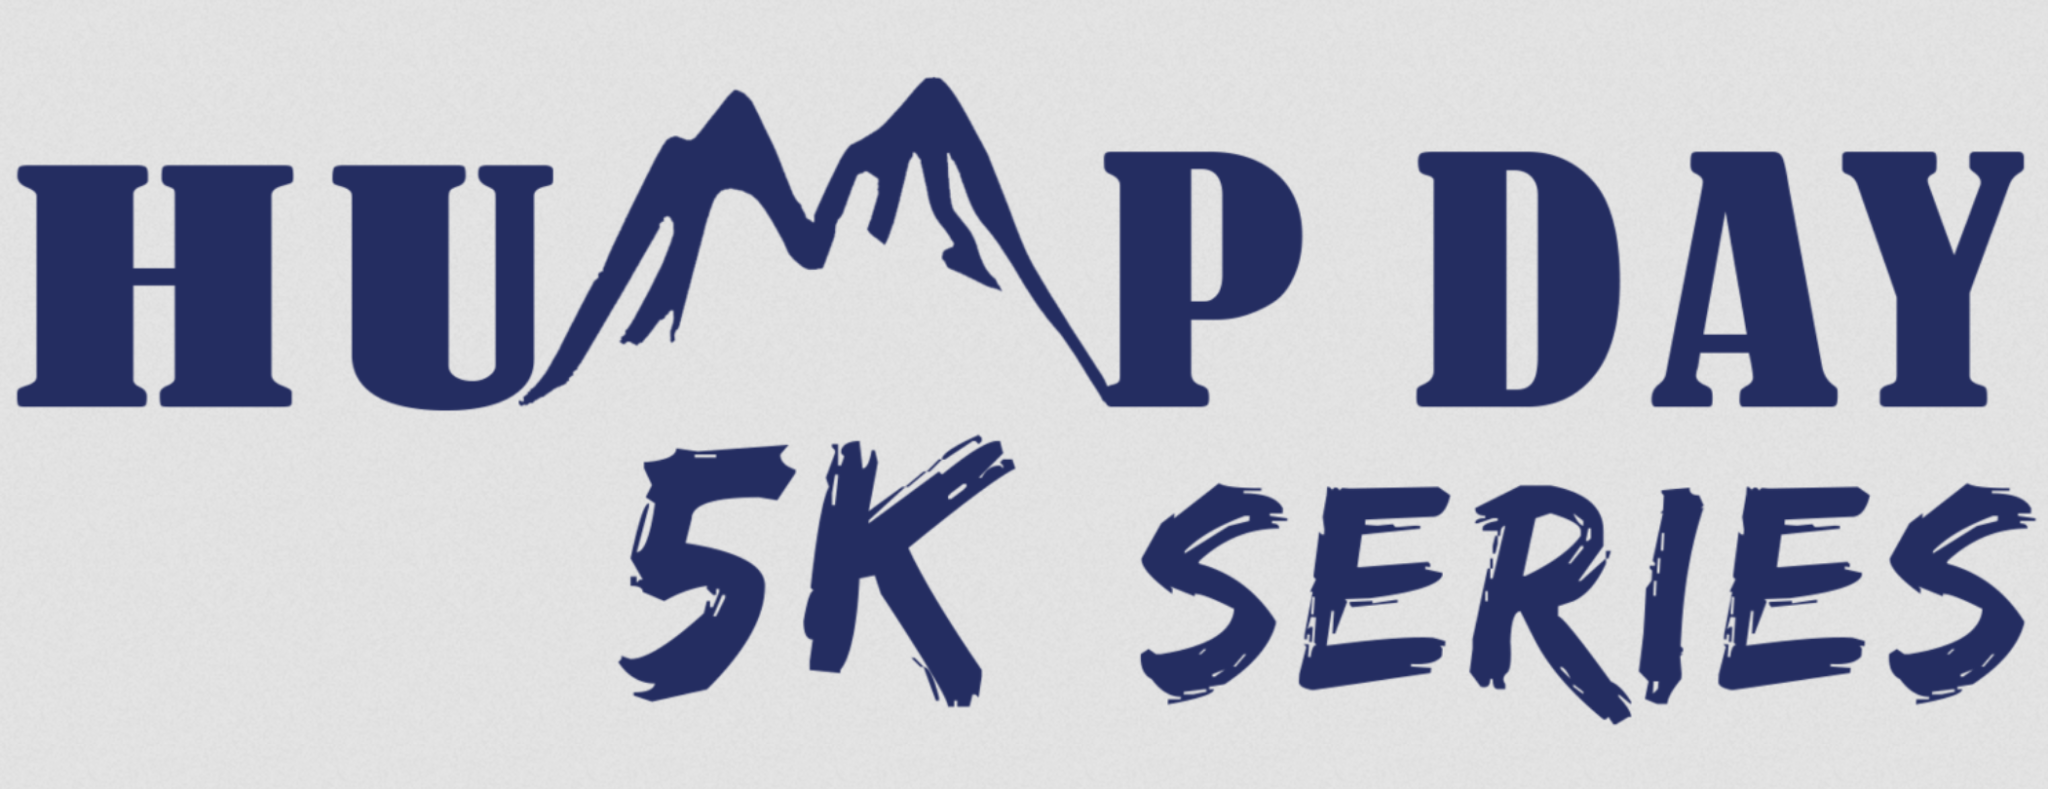 Hump Day 5K Summer Series July logo on RaceRaves